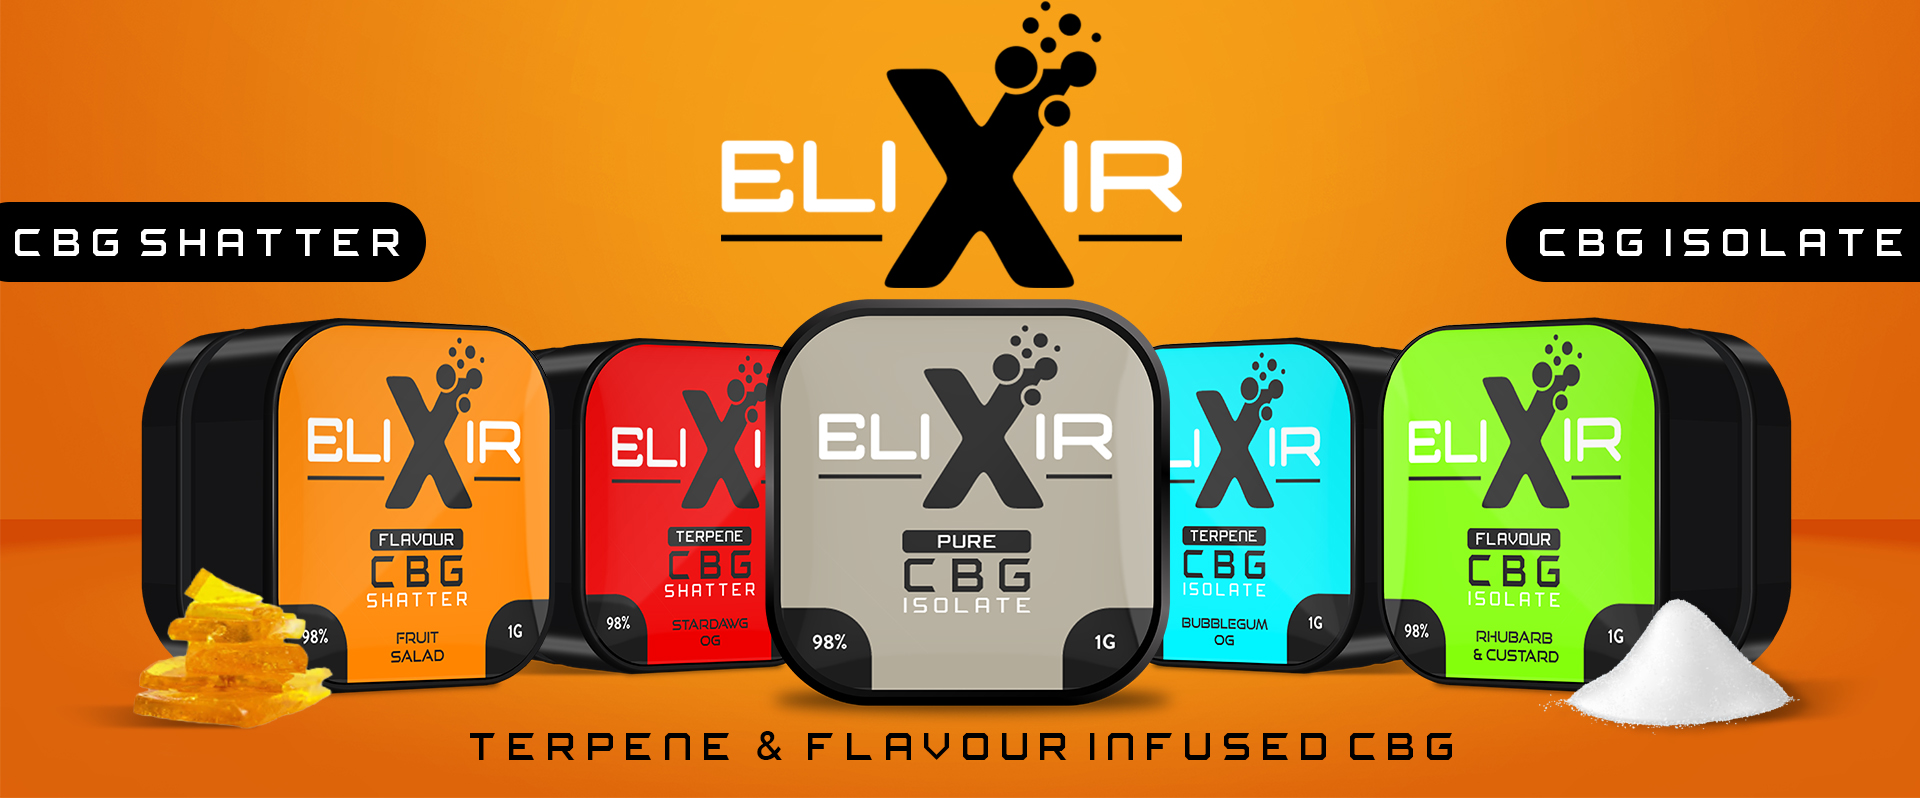 Elixir CBG Banner_1.jpg